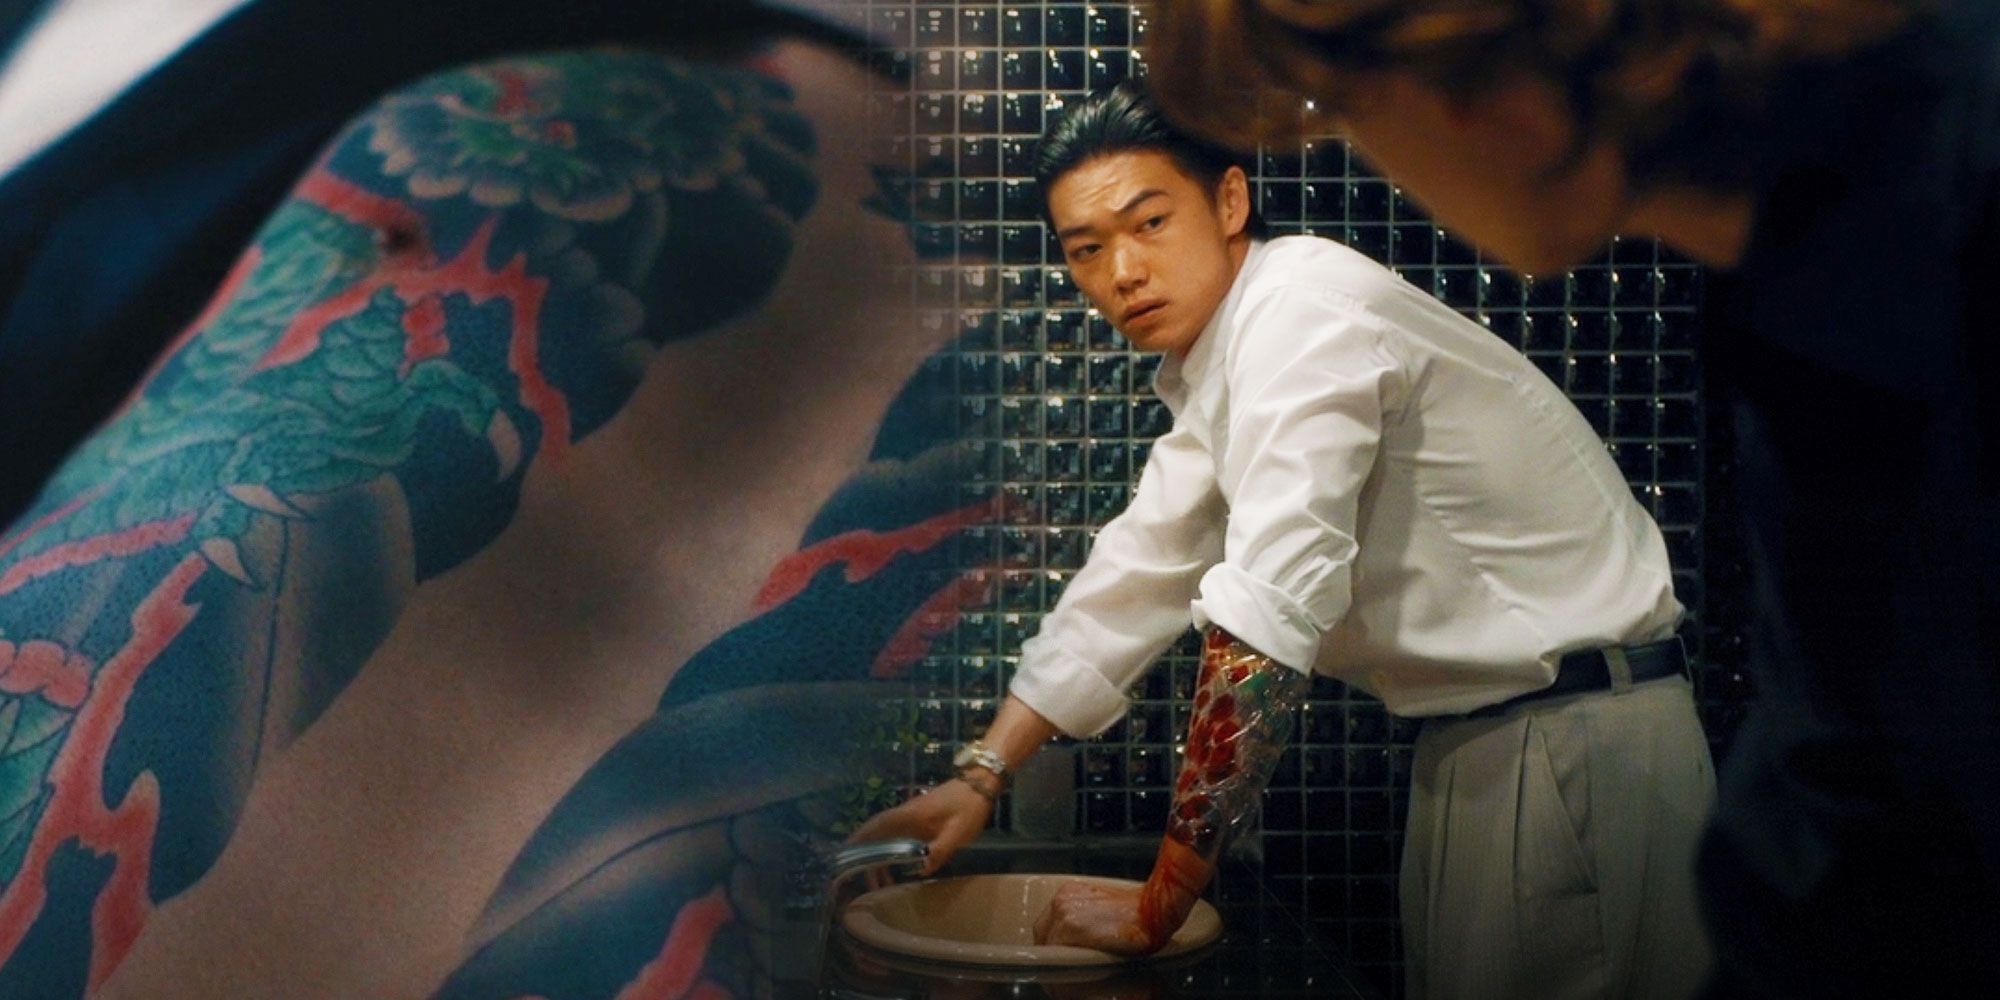 The Japanese Pilgrimage Where Horimono Tattoos Are Revered